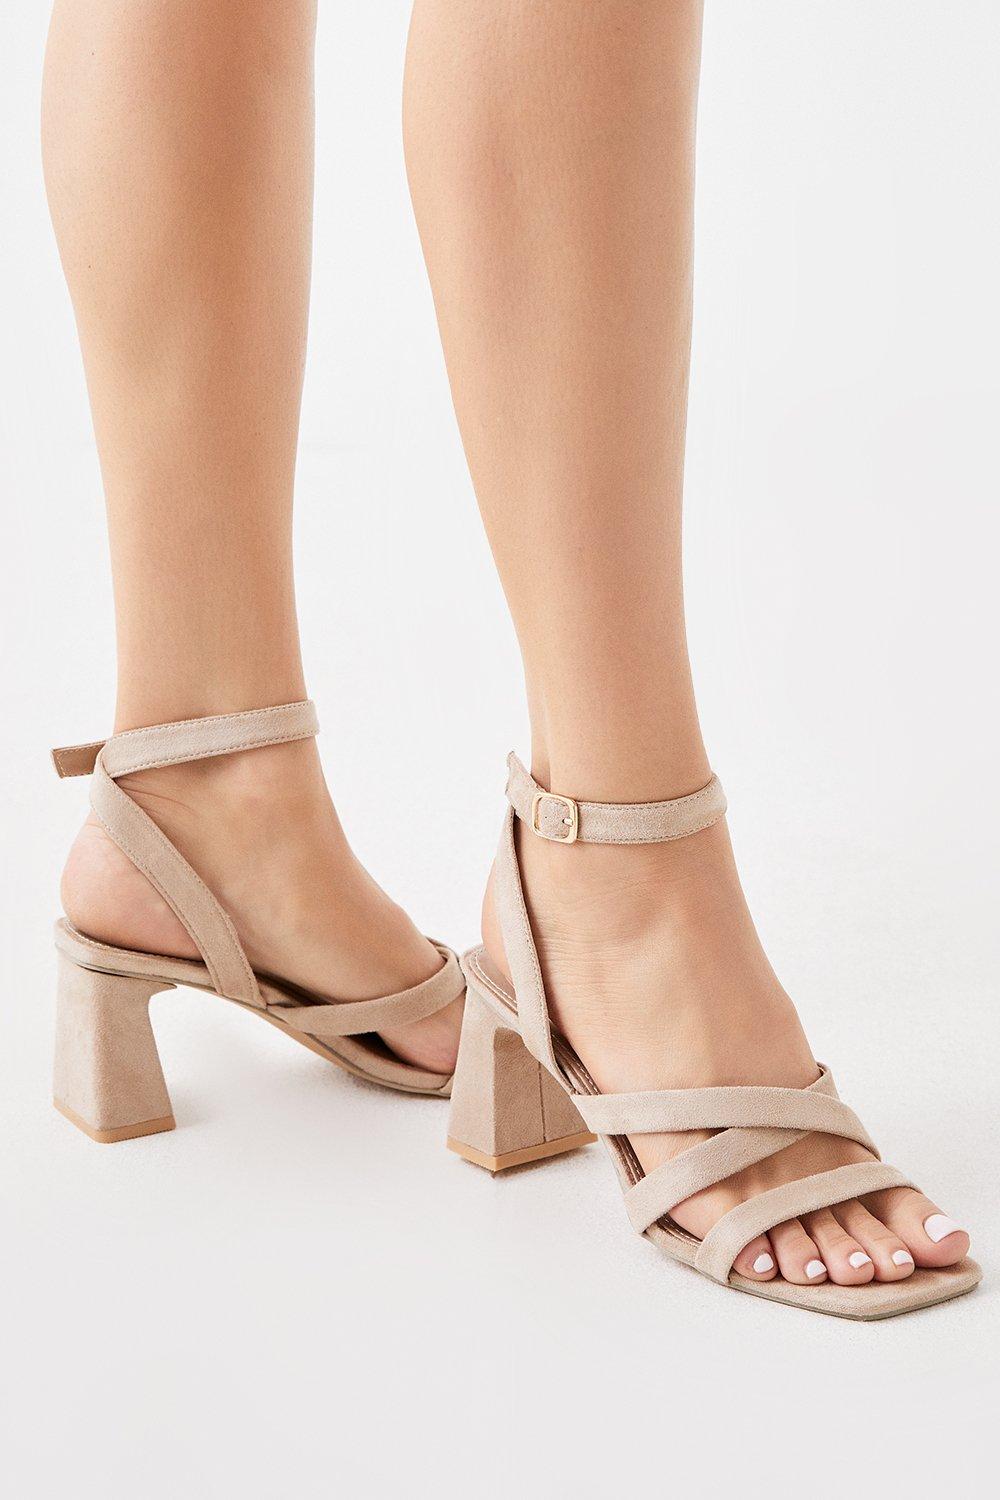 Women’s Bethany Strappy Heeled Sandals - blush - 6